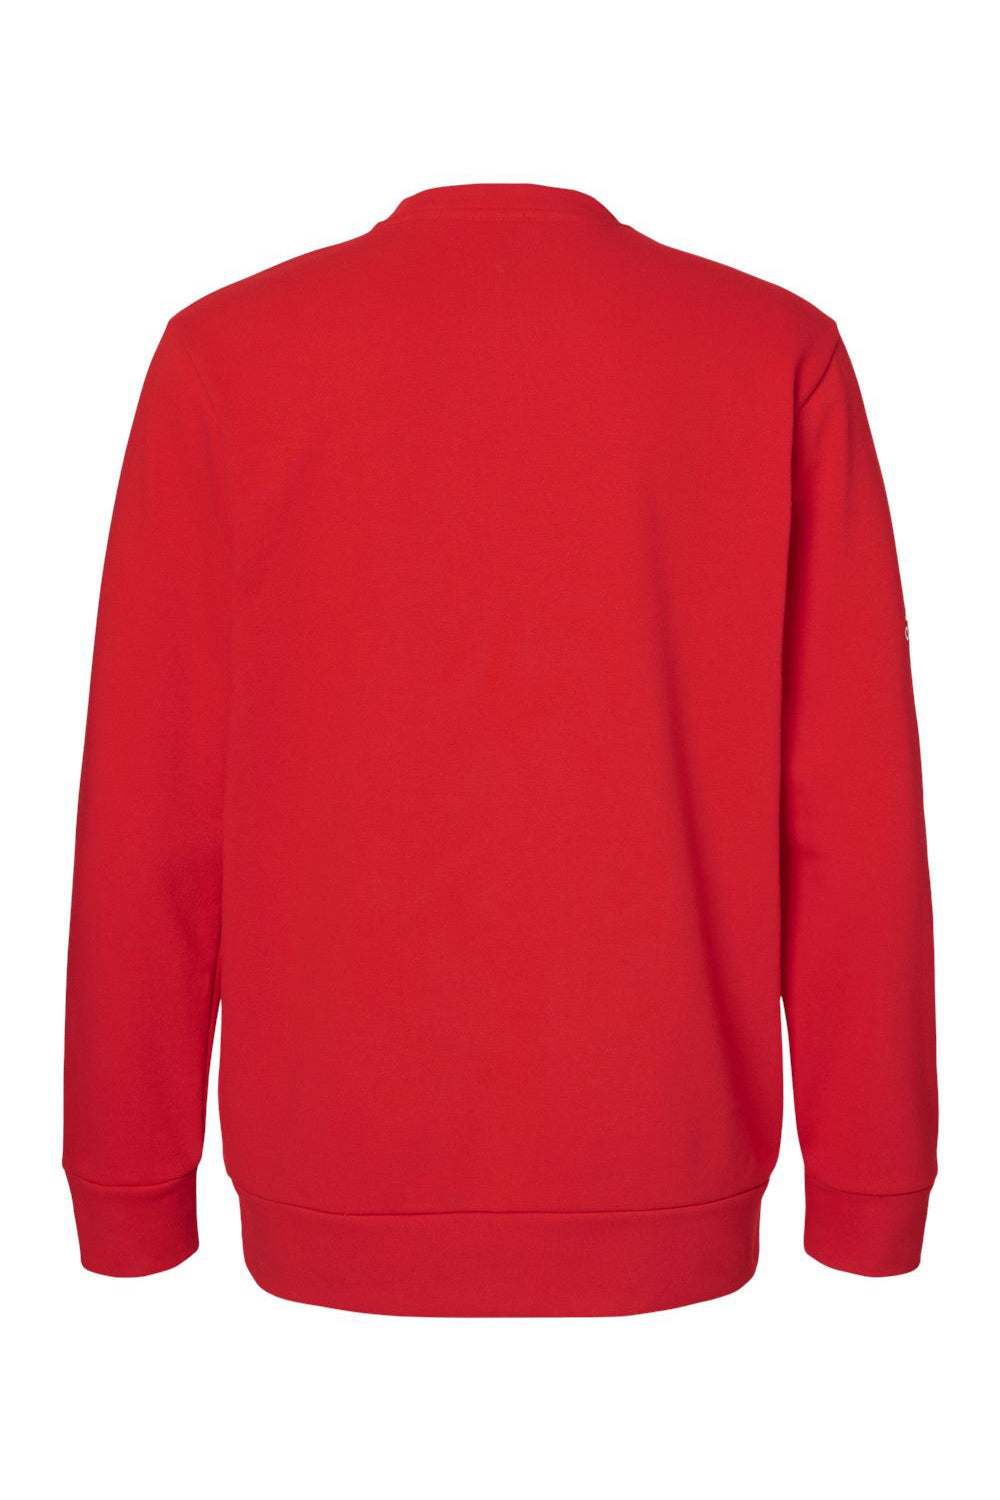 Adidas A434 Mens Fleece Crewneck Sweatshirt Red Flat Back